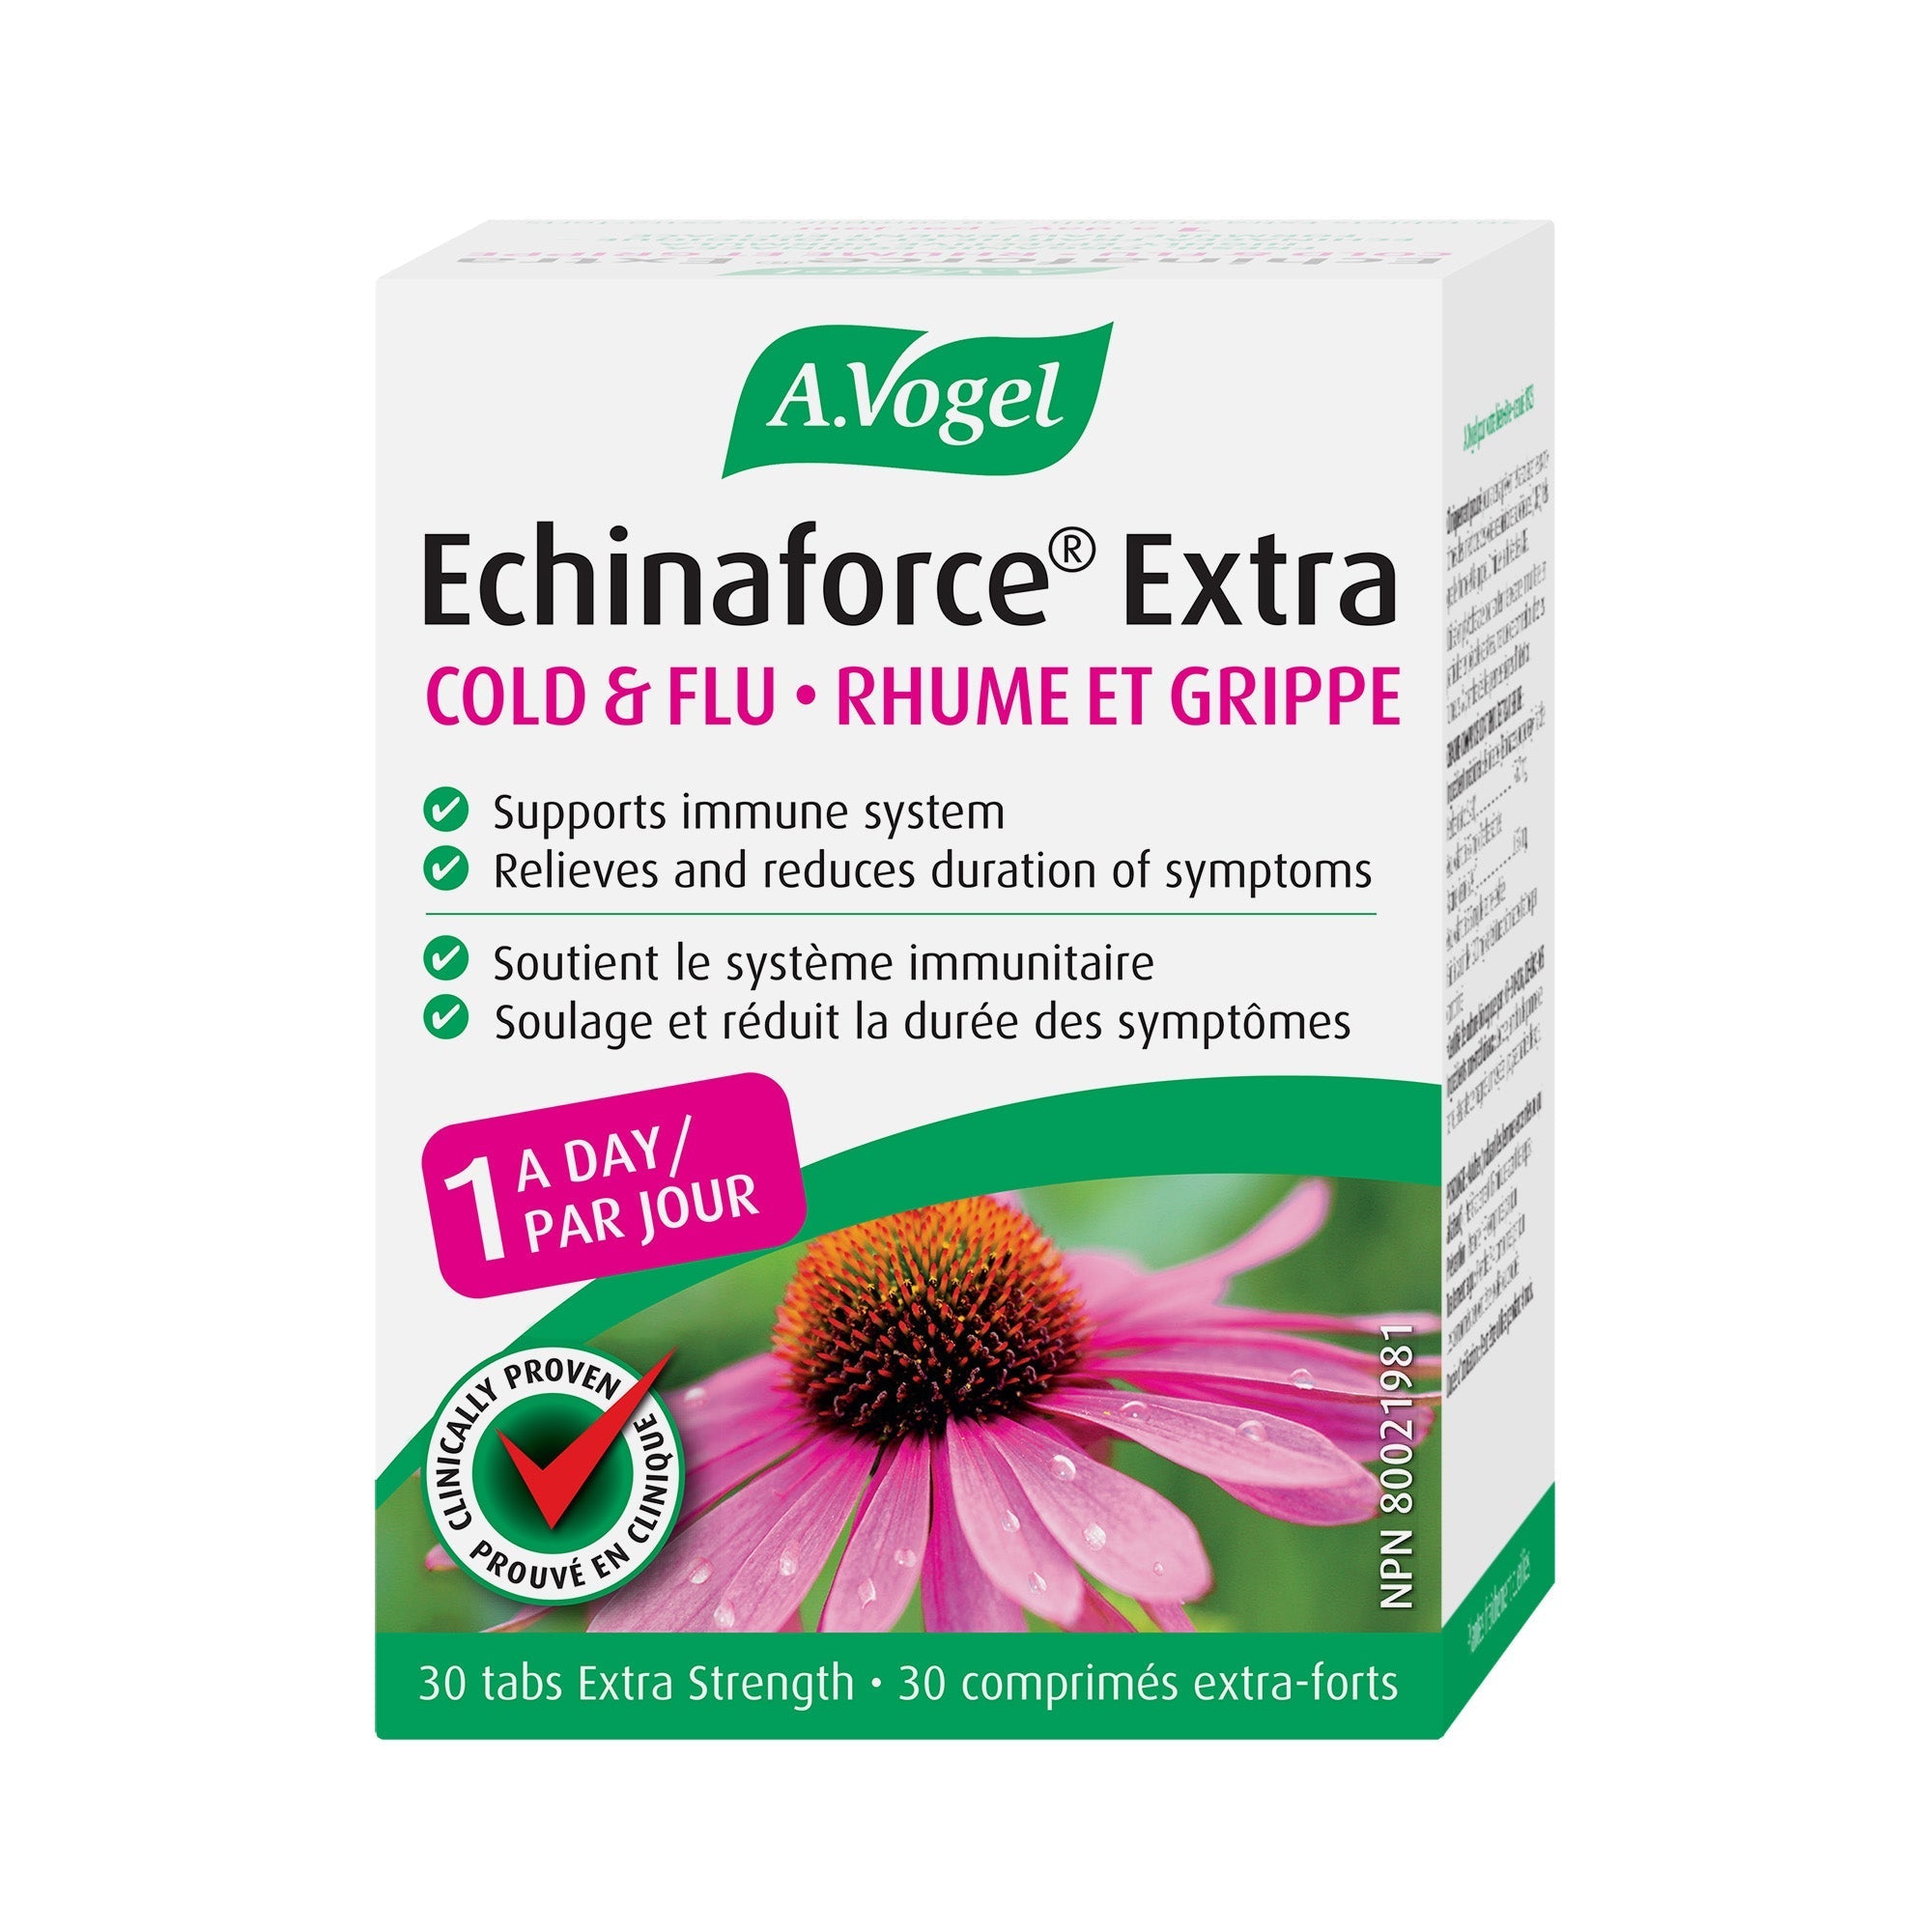 A. Vogel Echinaforce Extra 30 Tablets